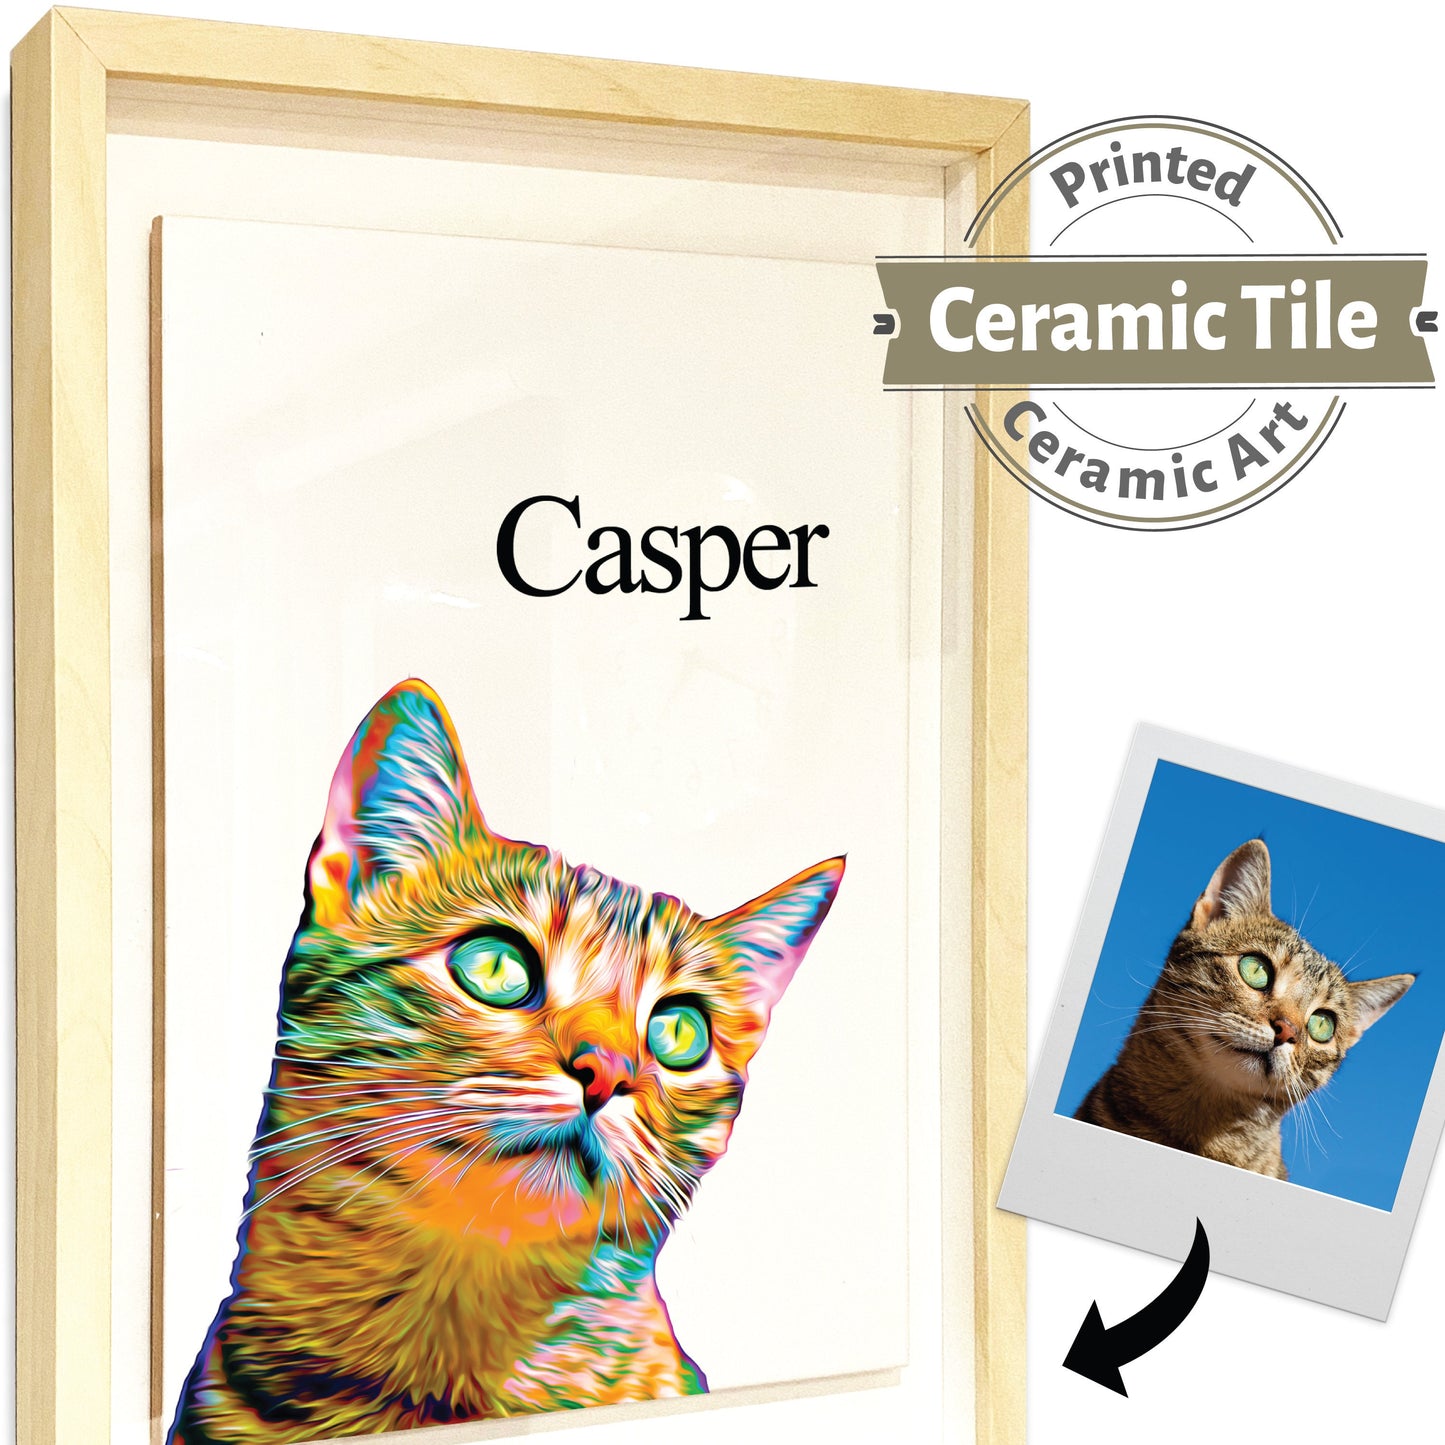 Pet Portrait Personalised Print CERAMIC TILE Custom Artwork Brush Painting Picture Framed Tile Ceramic Art - Pet Dog Cat Horse Animal